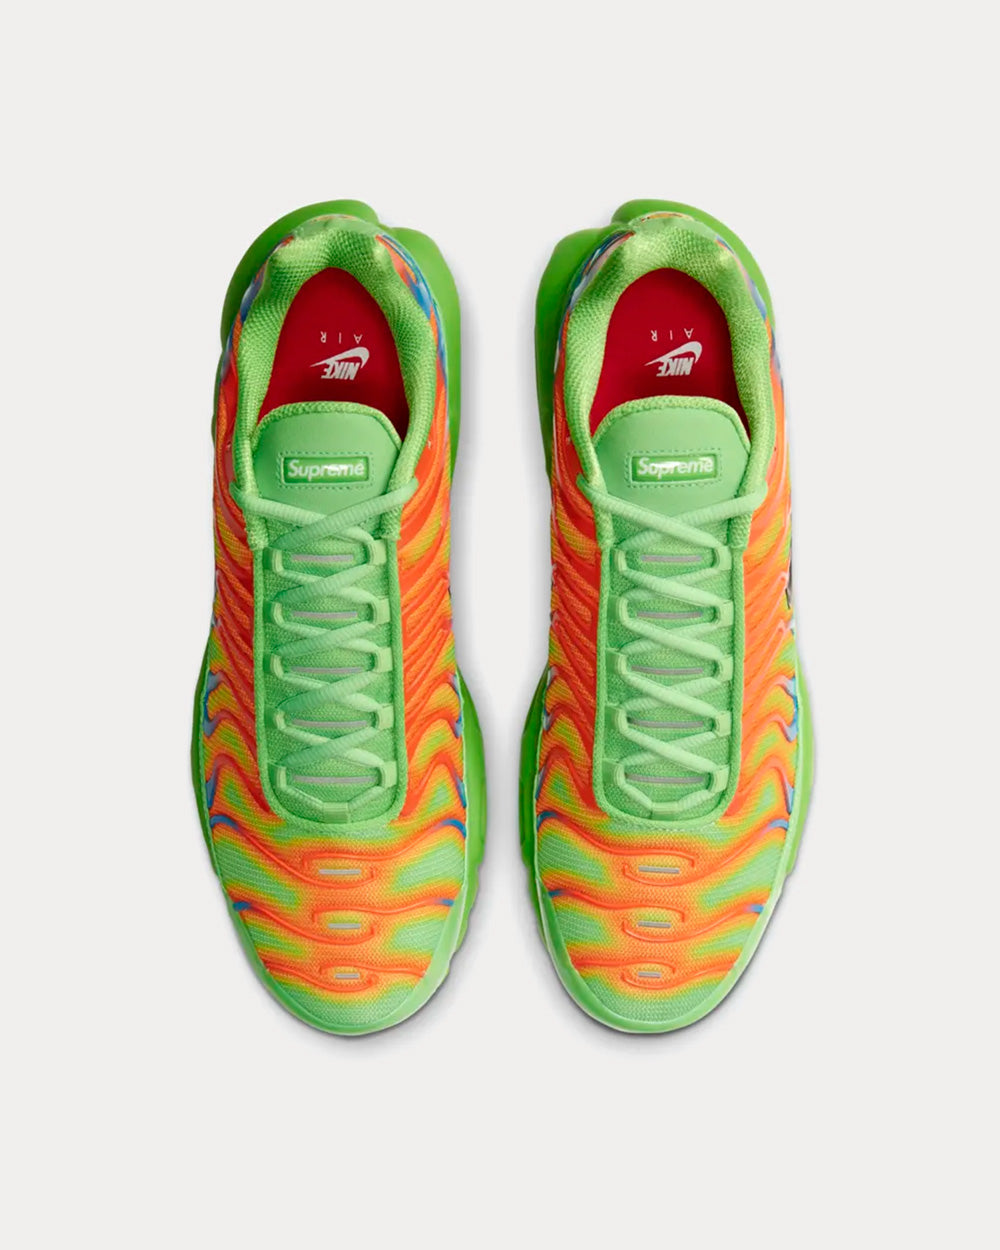 Nike x Supreme Air Max Plus Mean Green Low Top Sneakers - Sneak in Peace